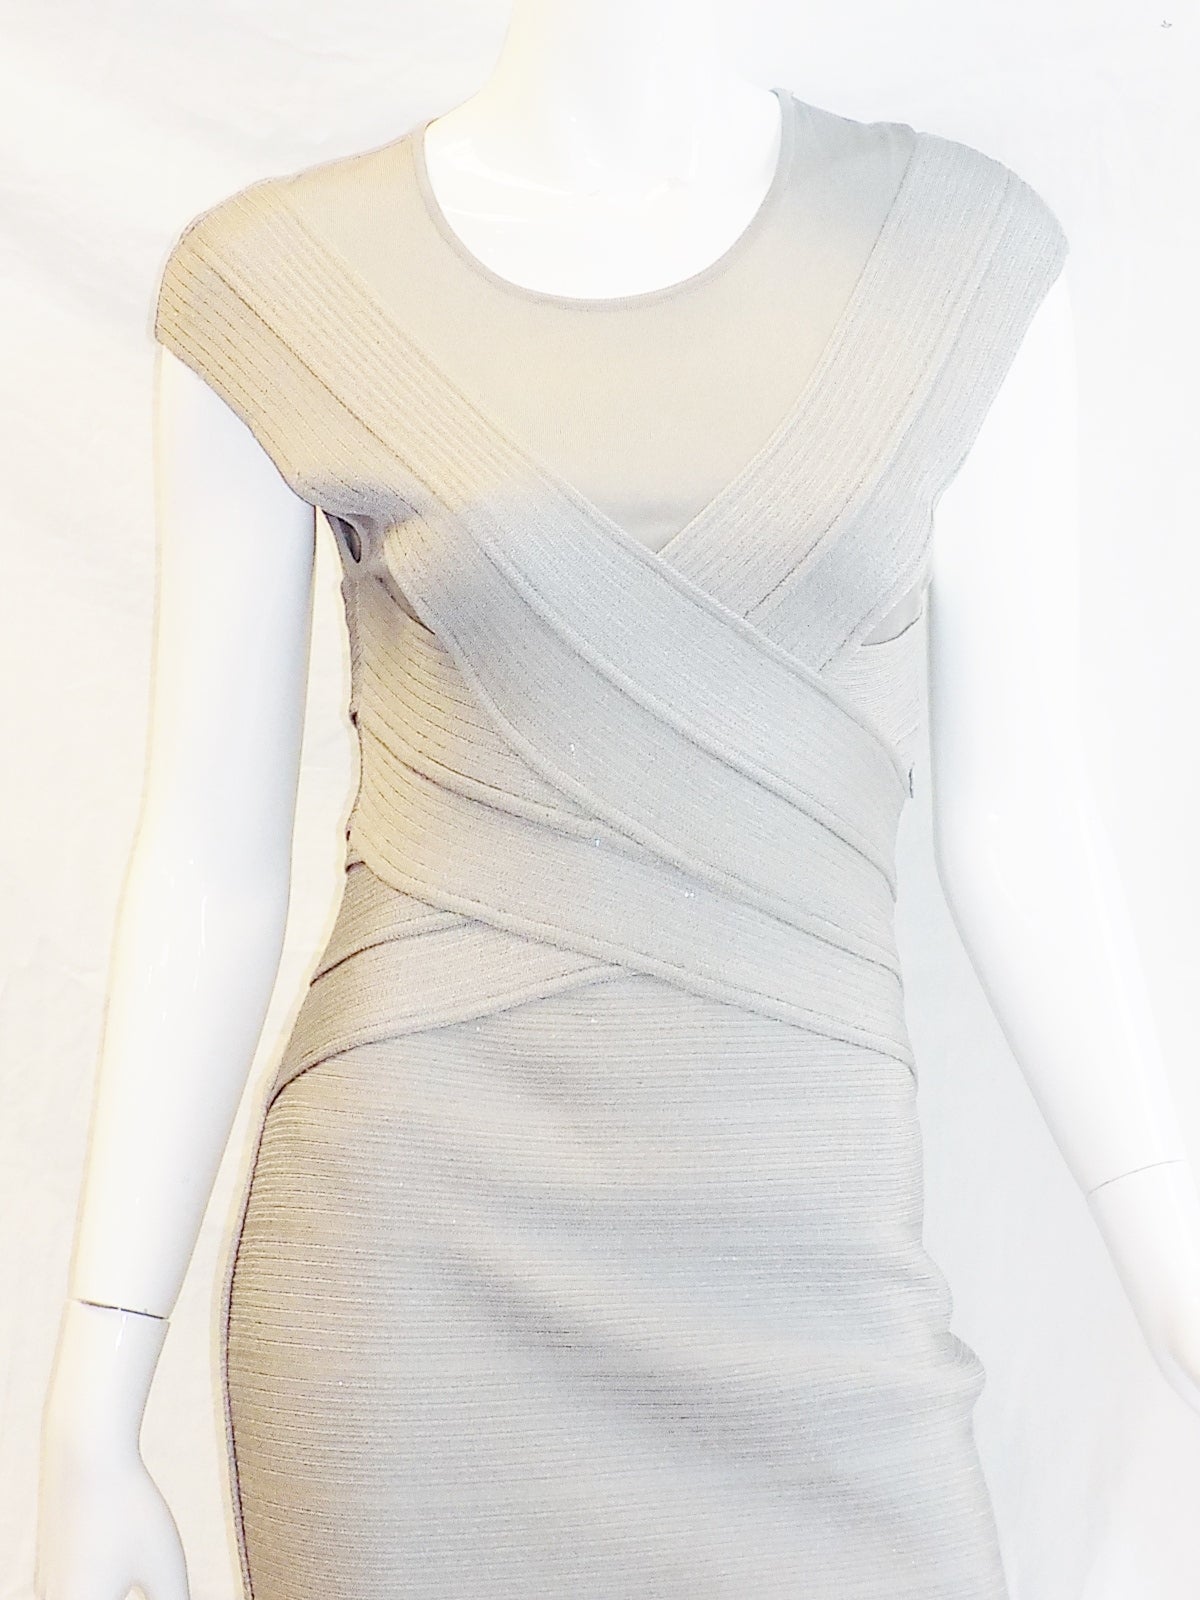 Women's Christian Dior Silver Grey Bandage Cocktail Dress